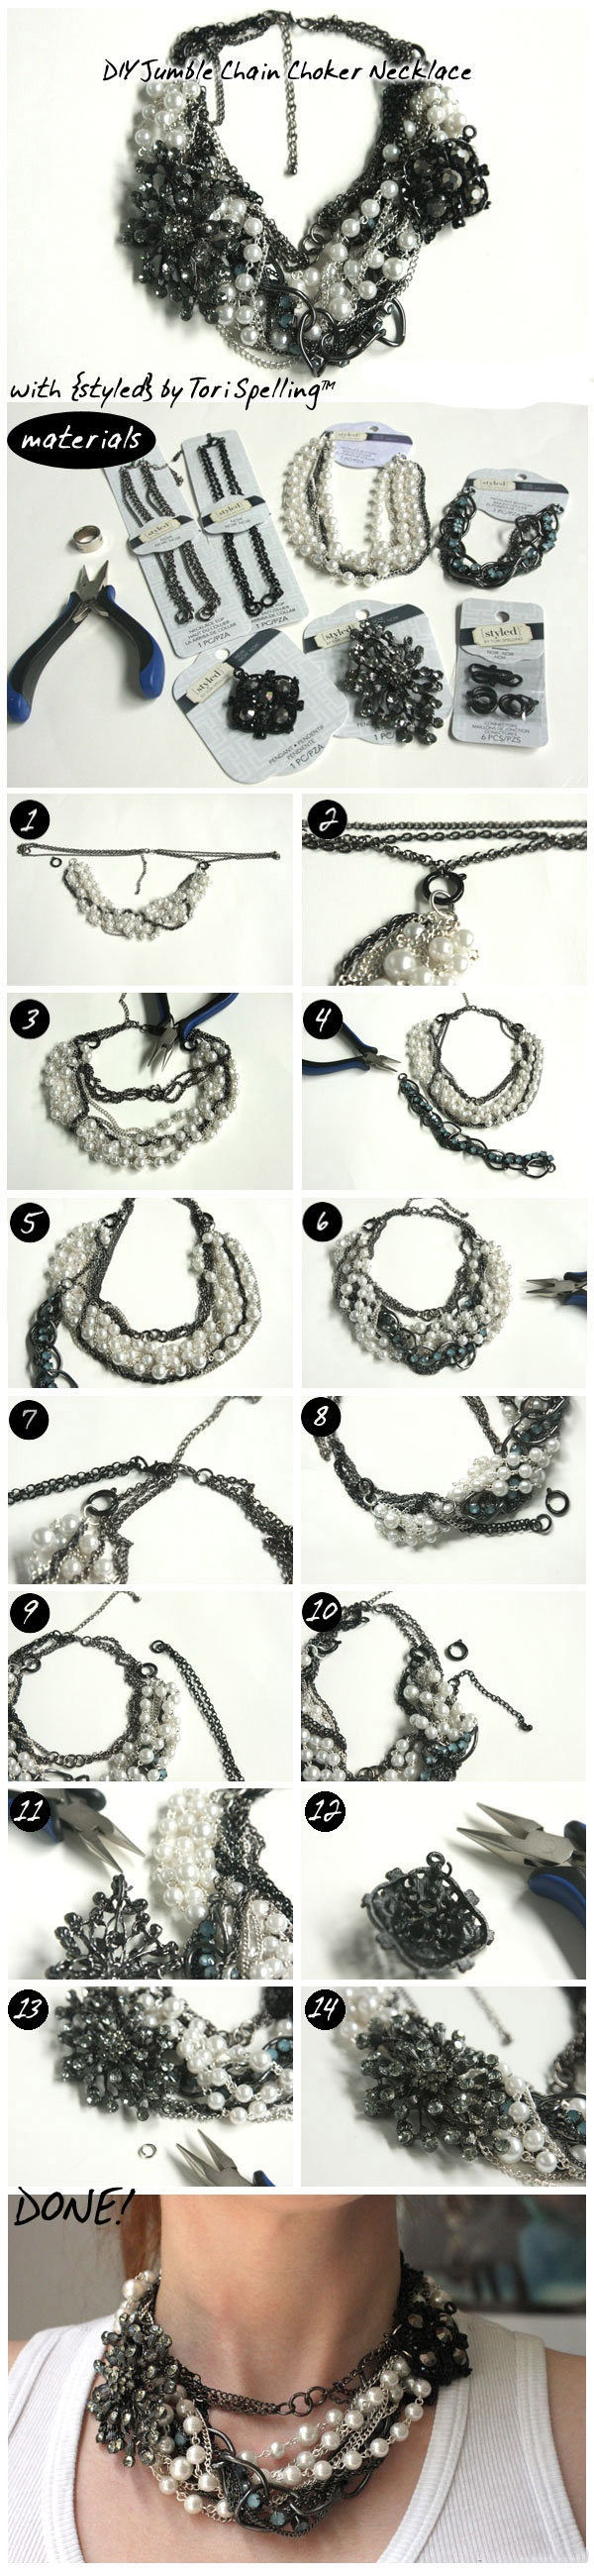 12 DIY Chain Statement Necklaces